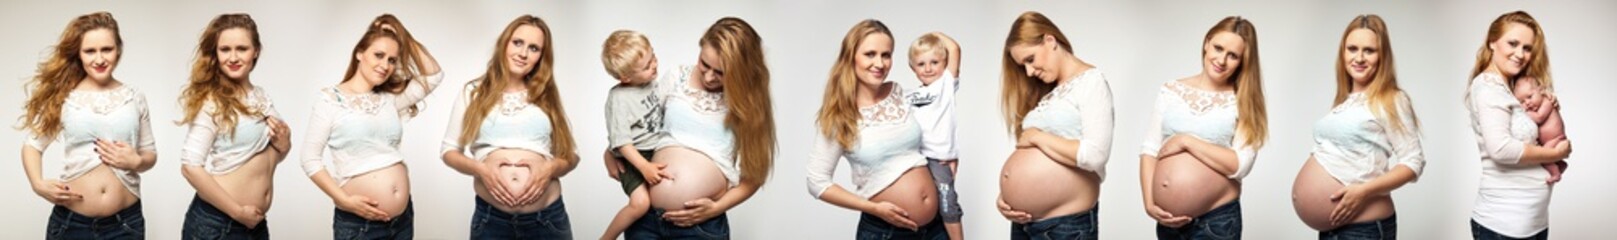 9 Monate schwanger